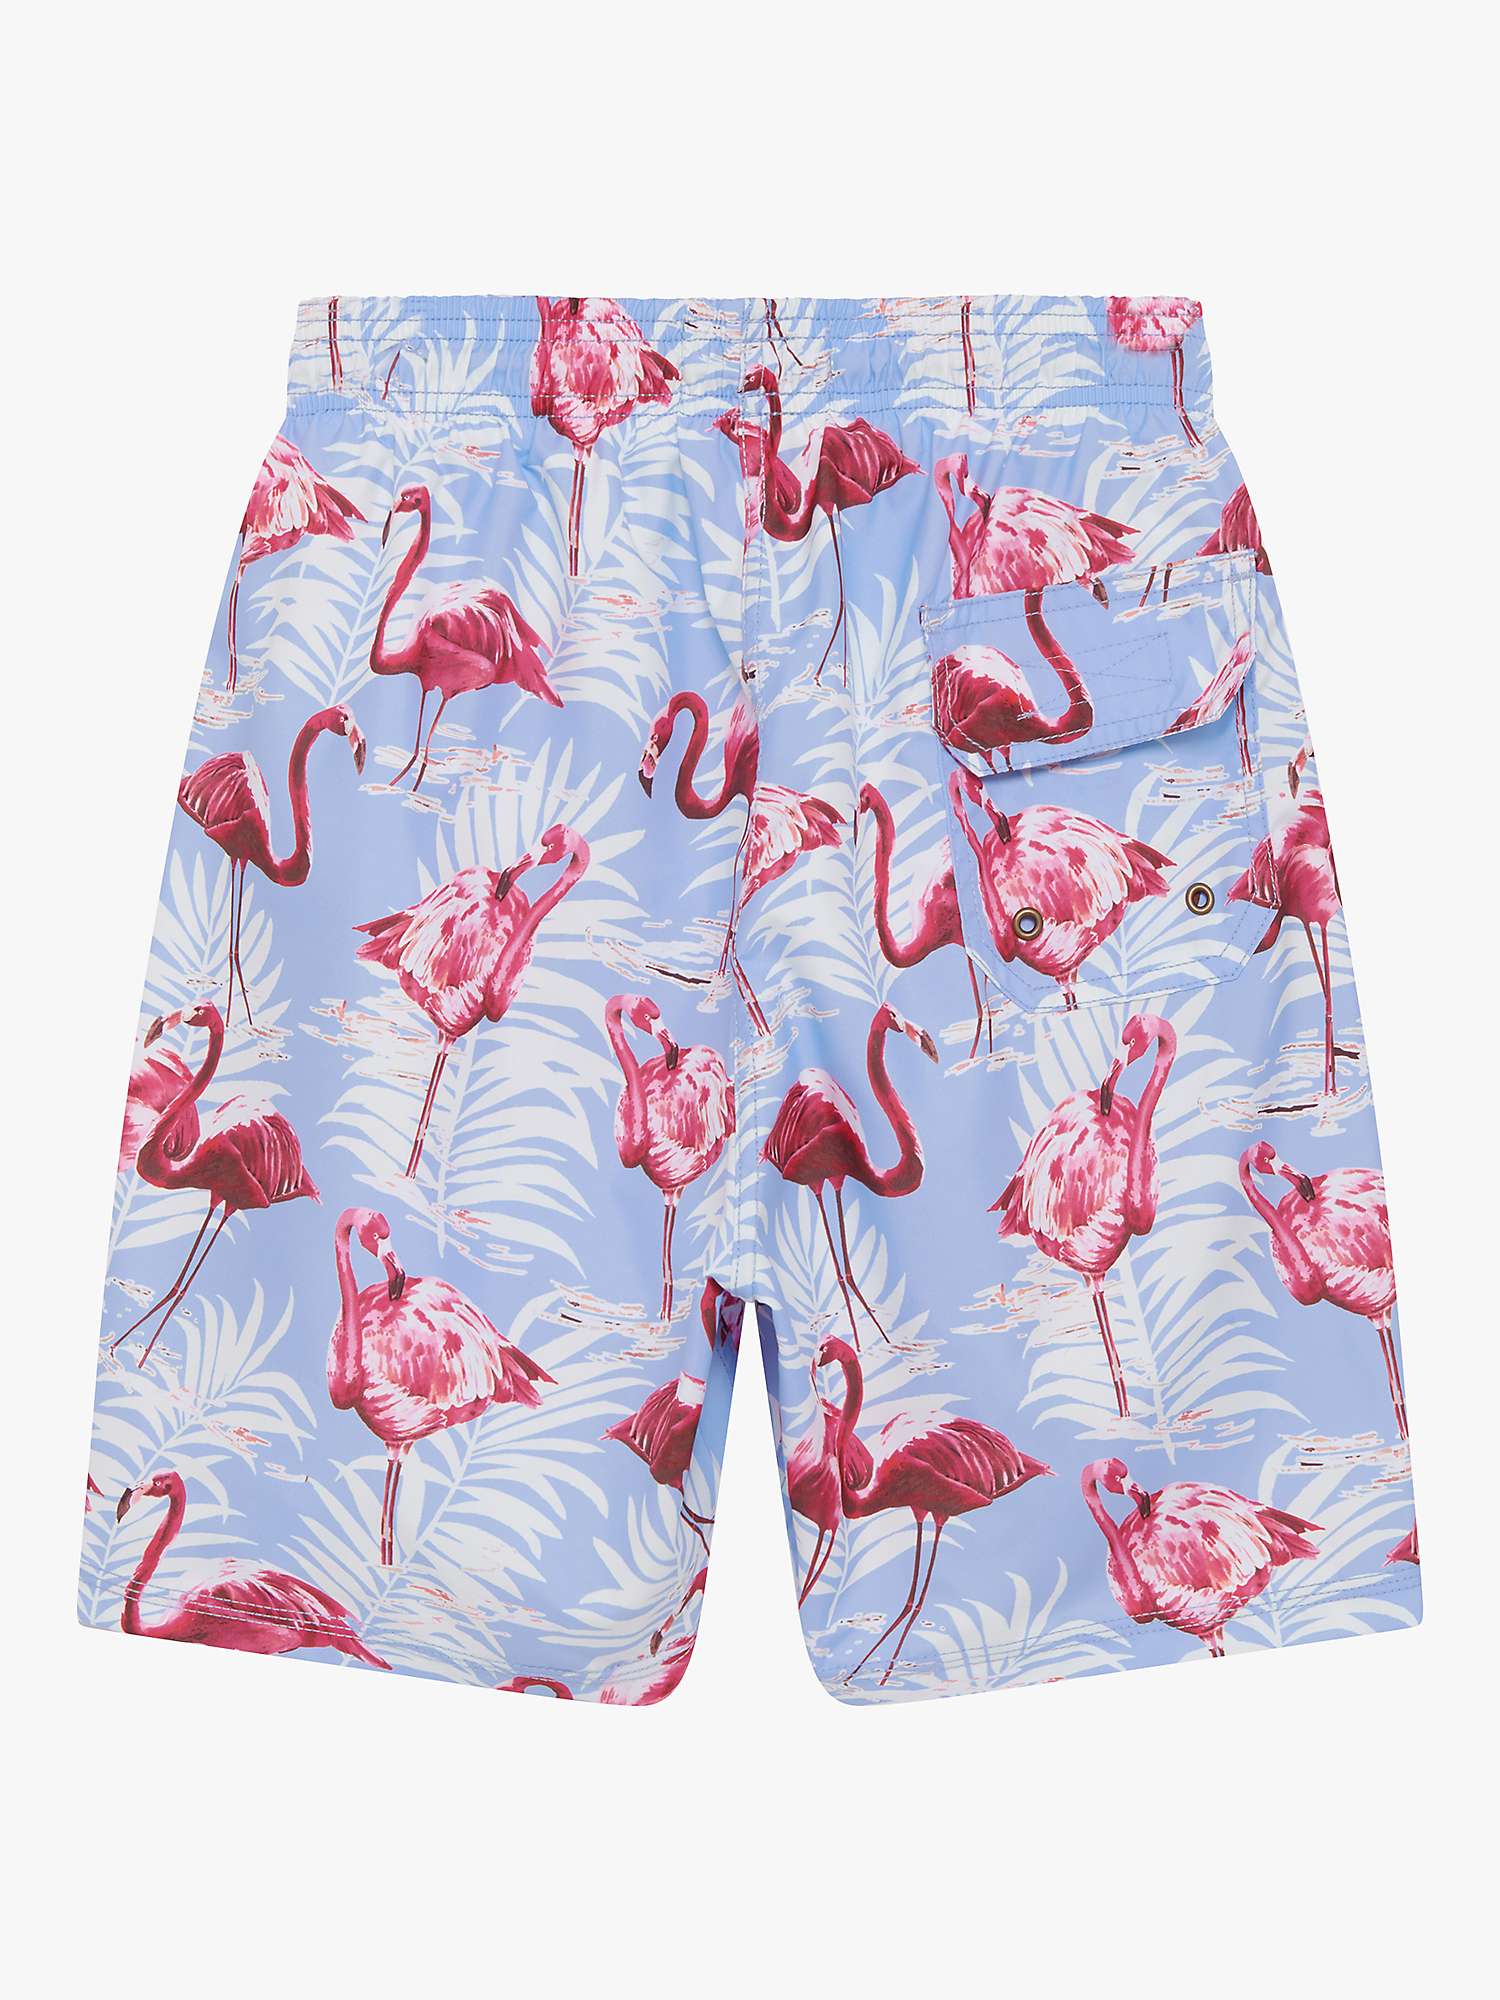 Trotters Flamingo Swim Shorts, Blue/Flamingo at John Lewis & Partners